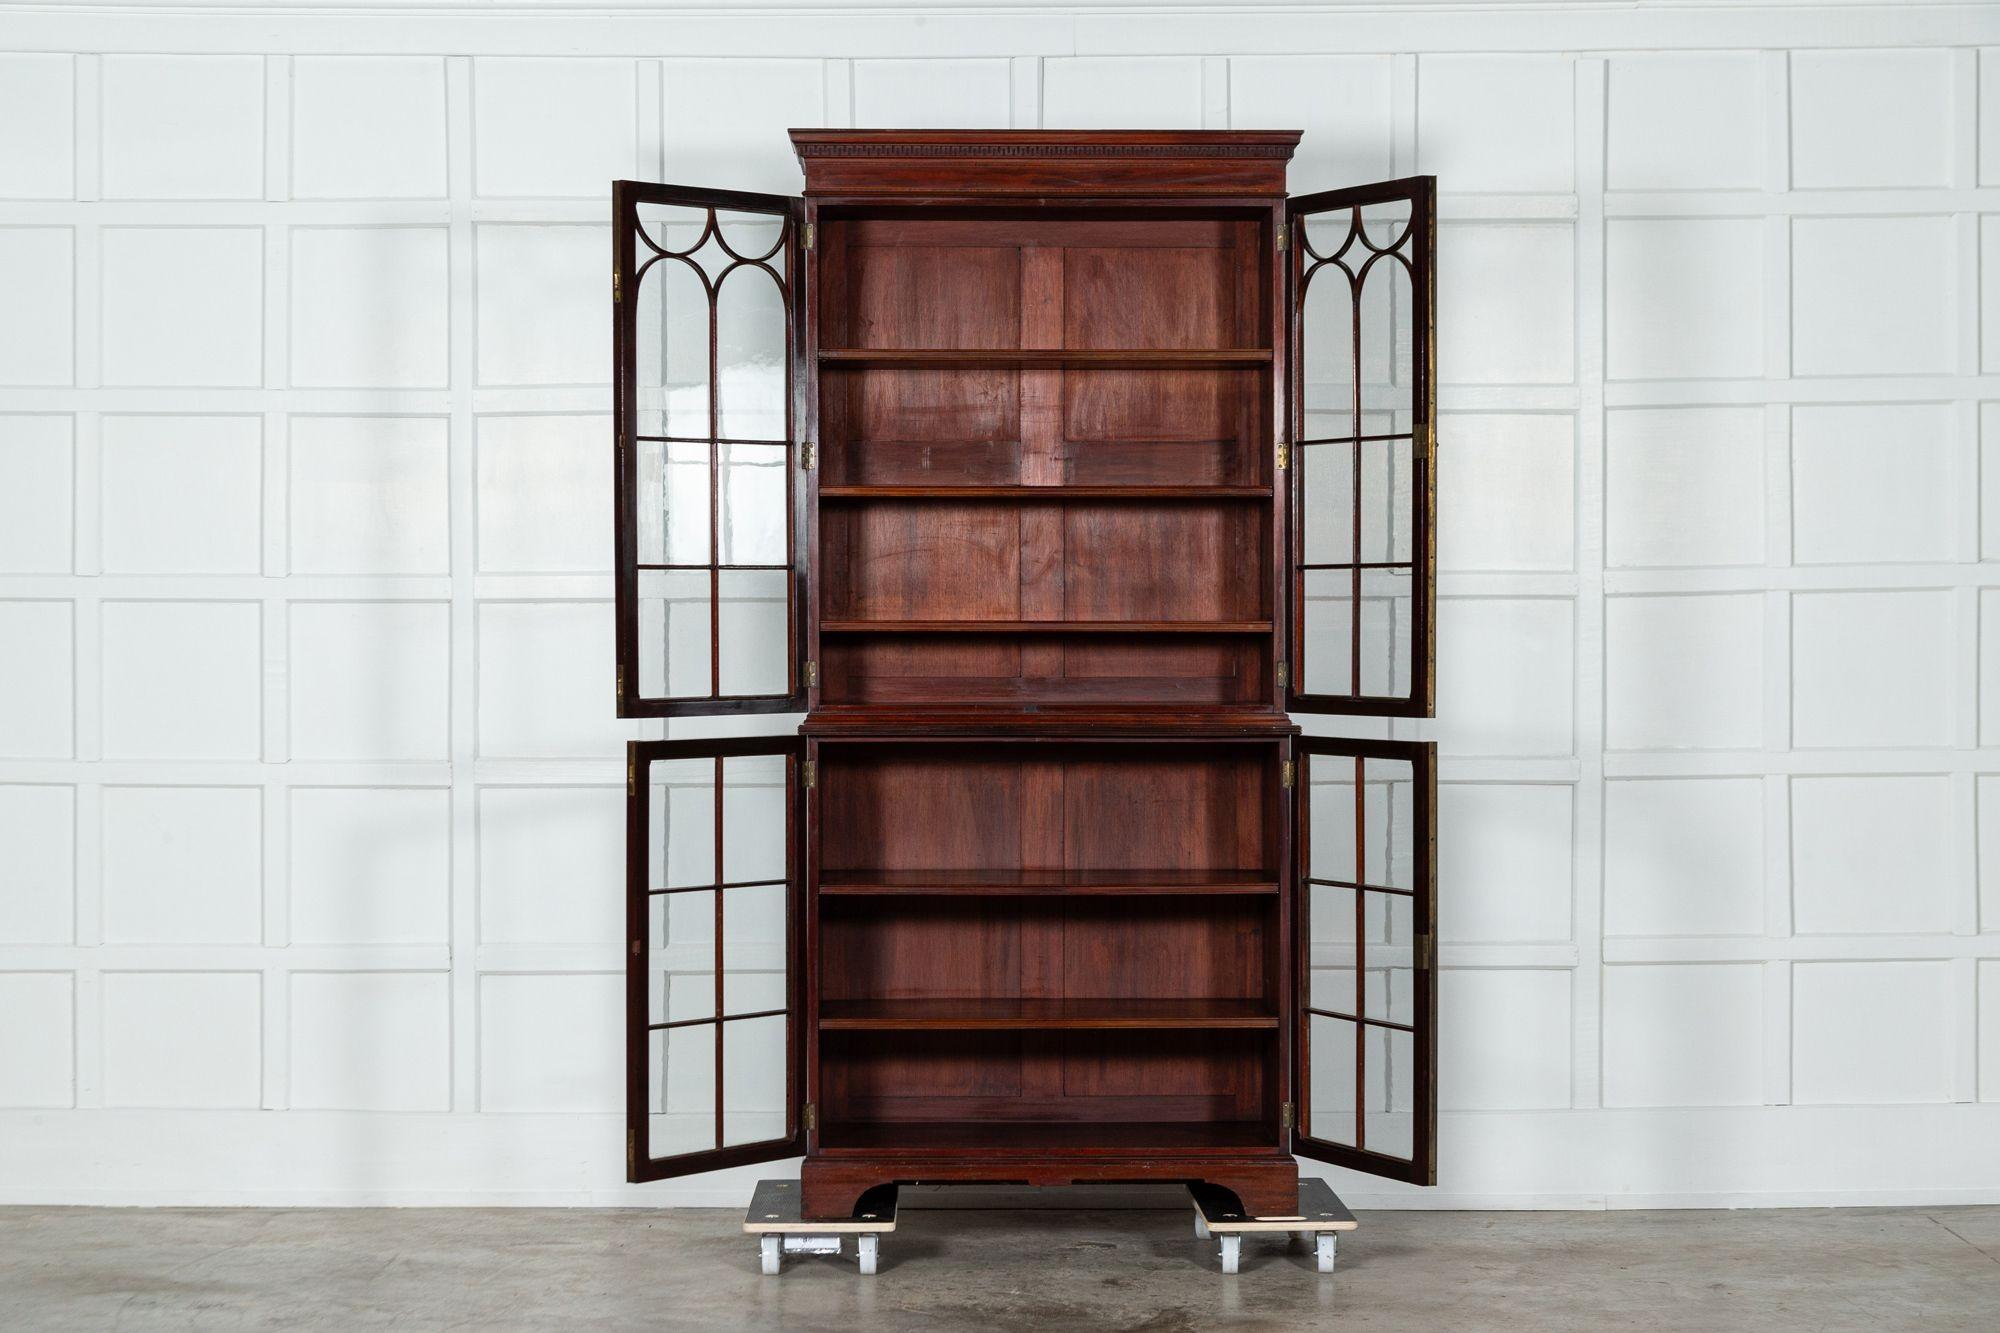 circa 1770
George III 18thC Mahogany Glazed Twin Library Bookcase Cabinet
sku 1597
Base W98 x D46 x H97 cm
Top W101 x D37 x H116 cm
Together W101 x D46 x H213 cm